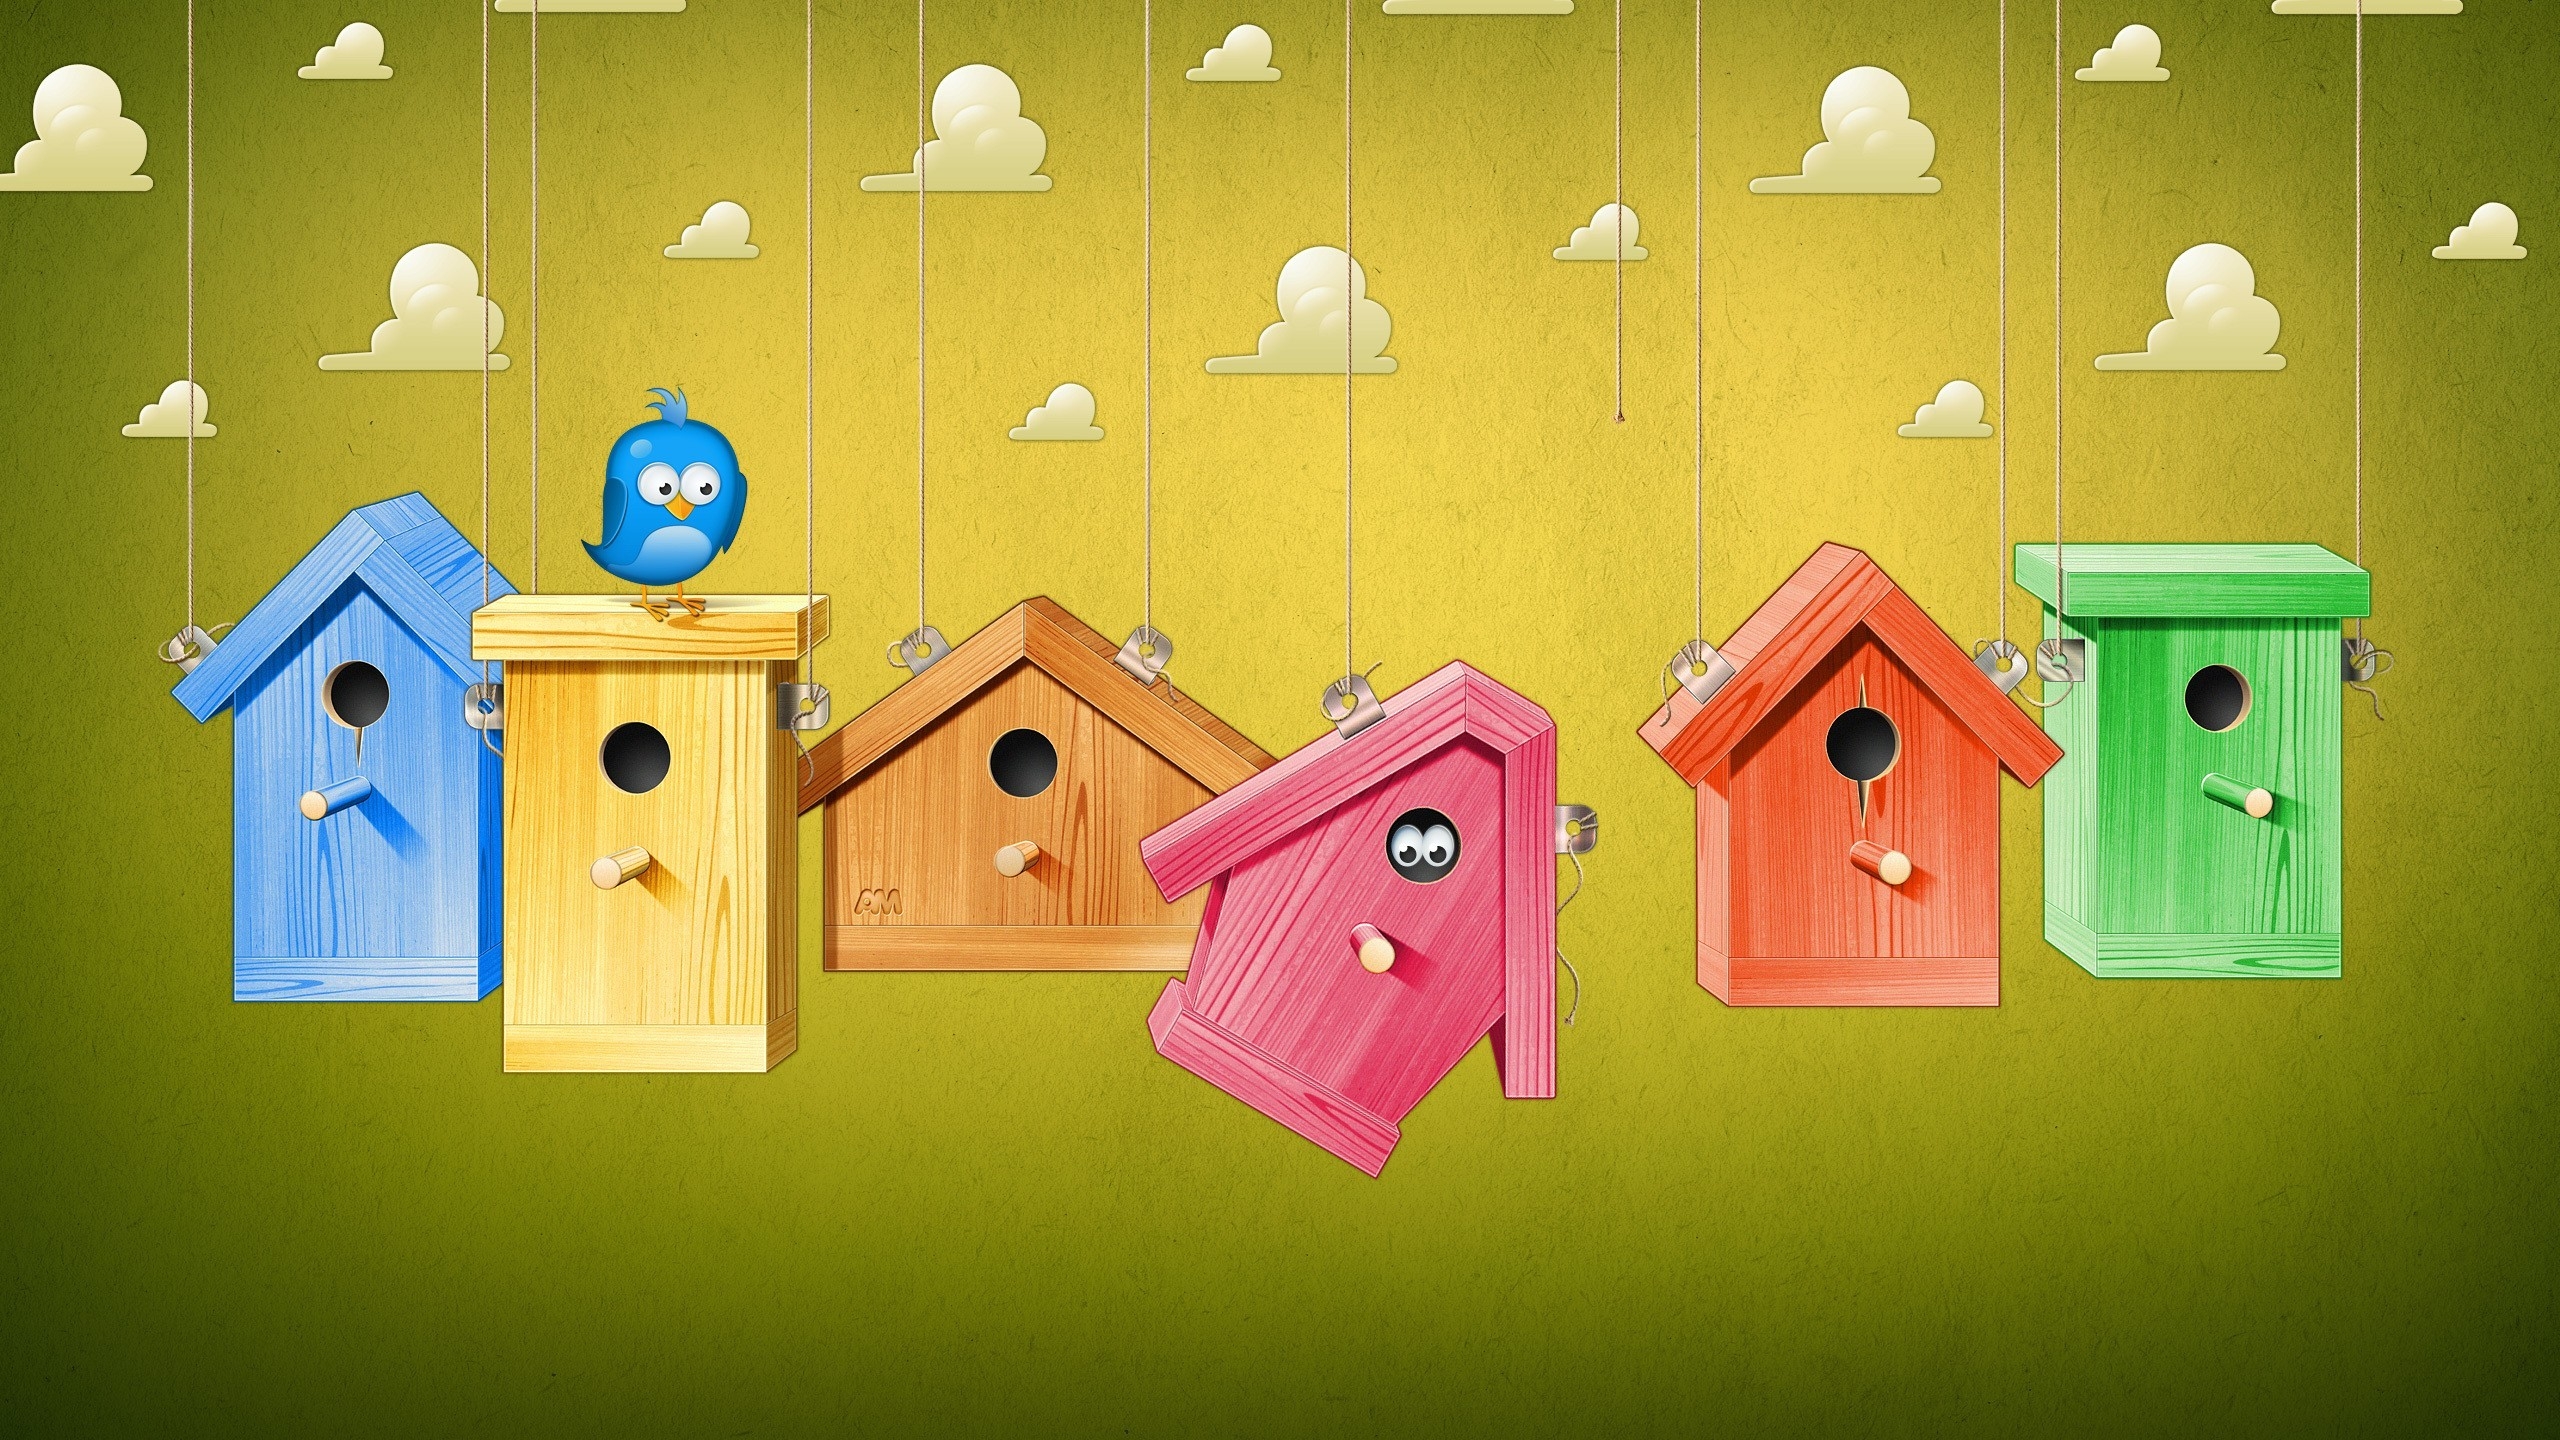 Cute Bird Houses for 2560x1440 HDTV resolution